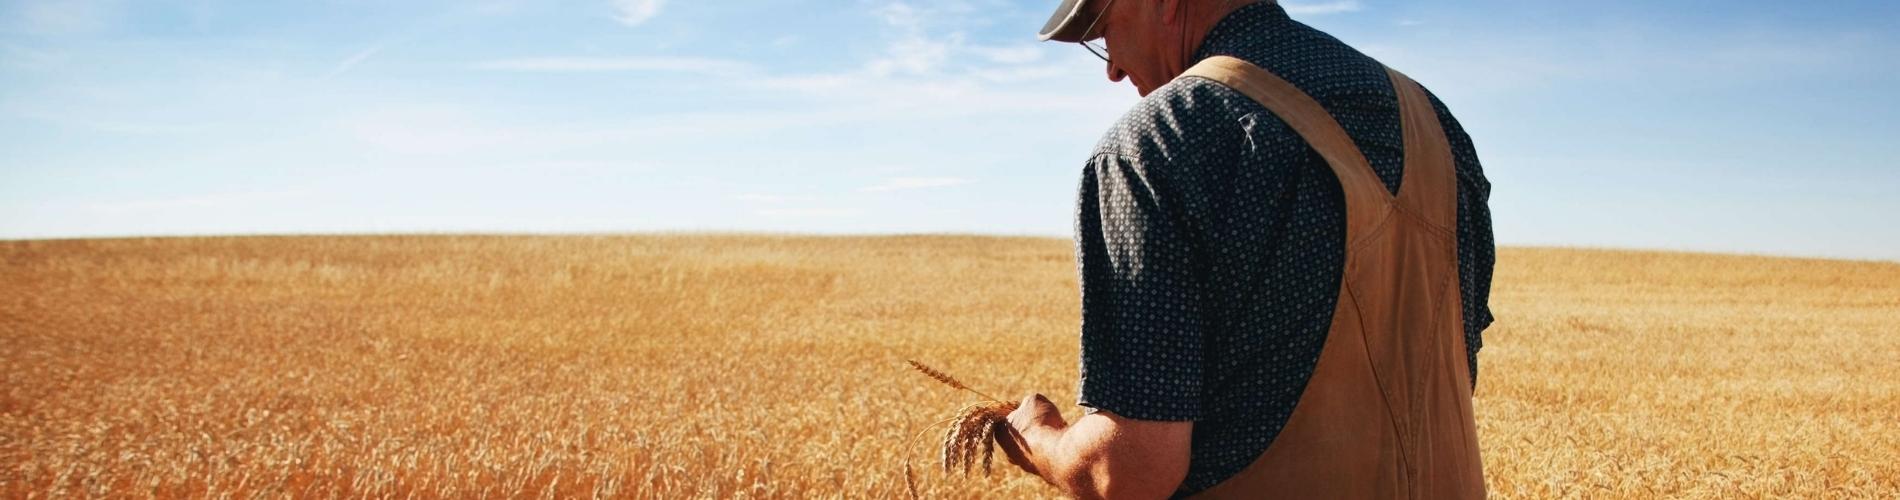 Farmer in field examing wheat crop